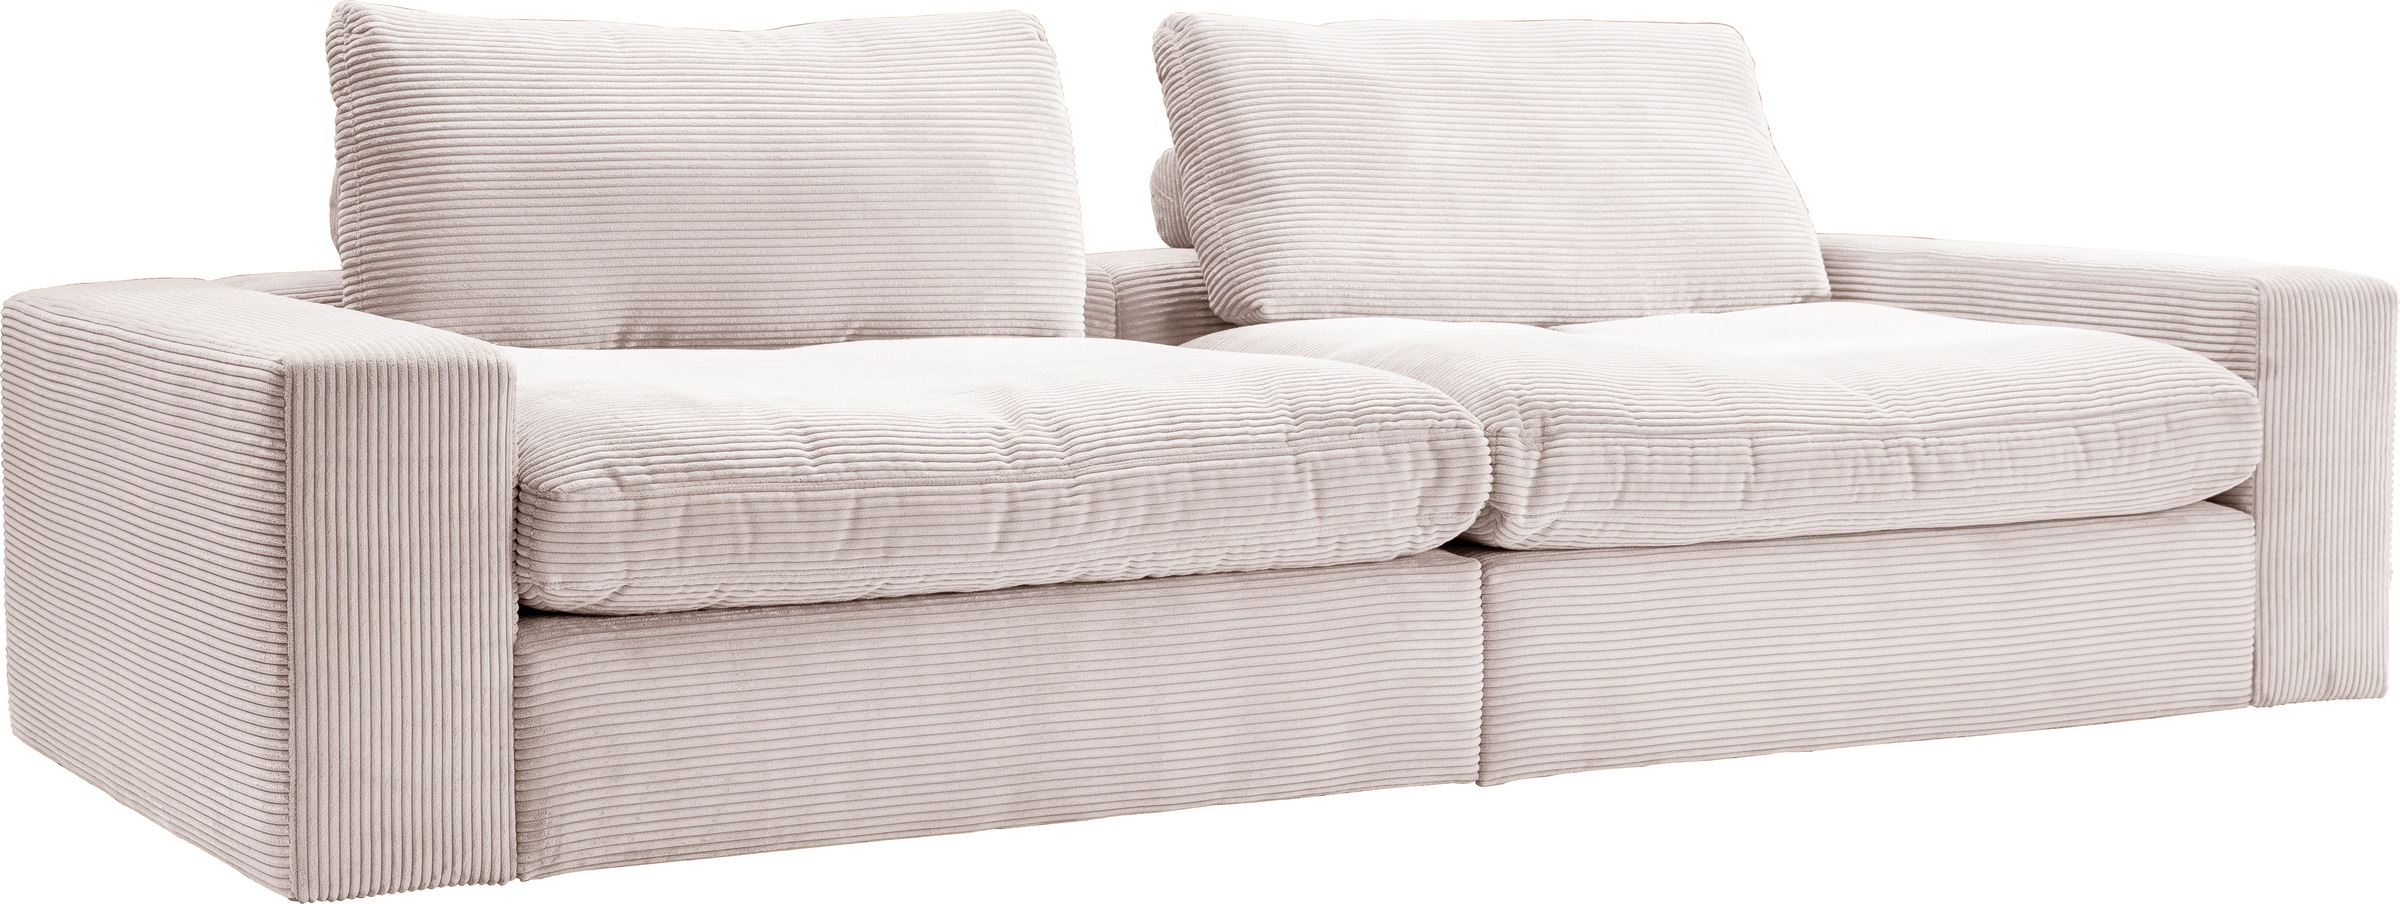 alina Big-Sofa »Sandy«, 266 cm cm breit und BAUR tief, in modernem 123 | Cordstoff